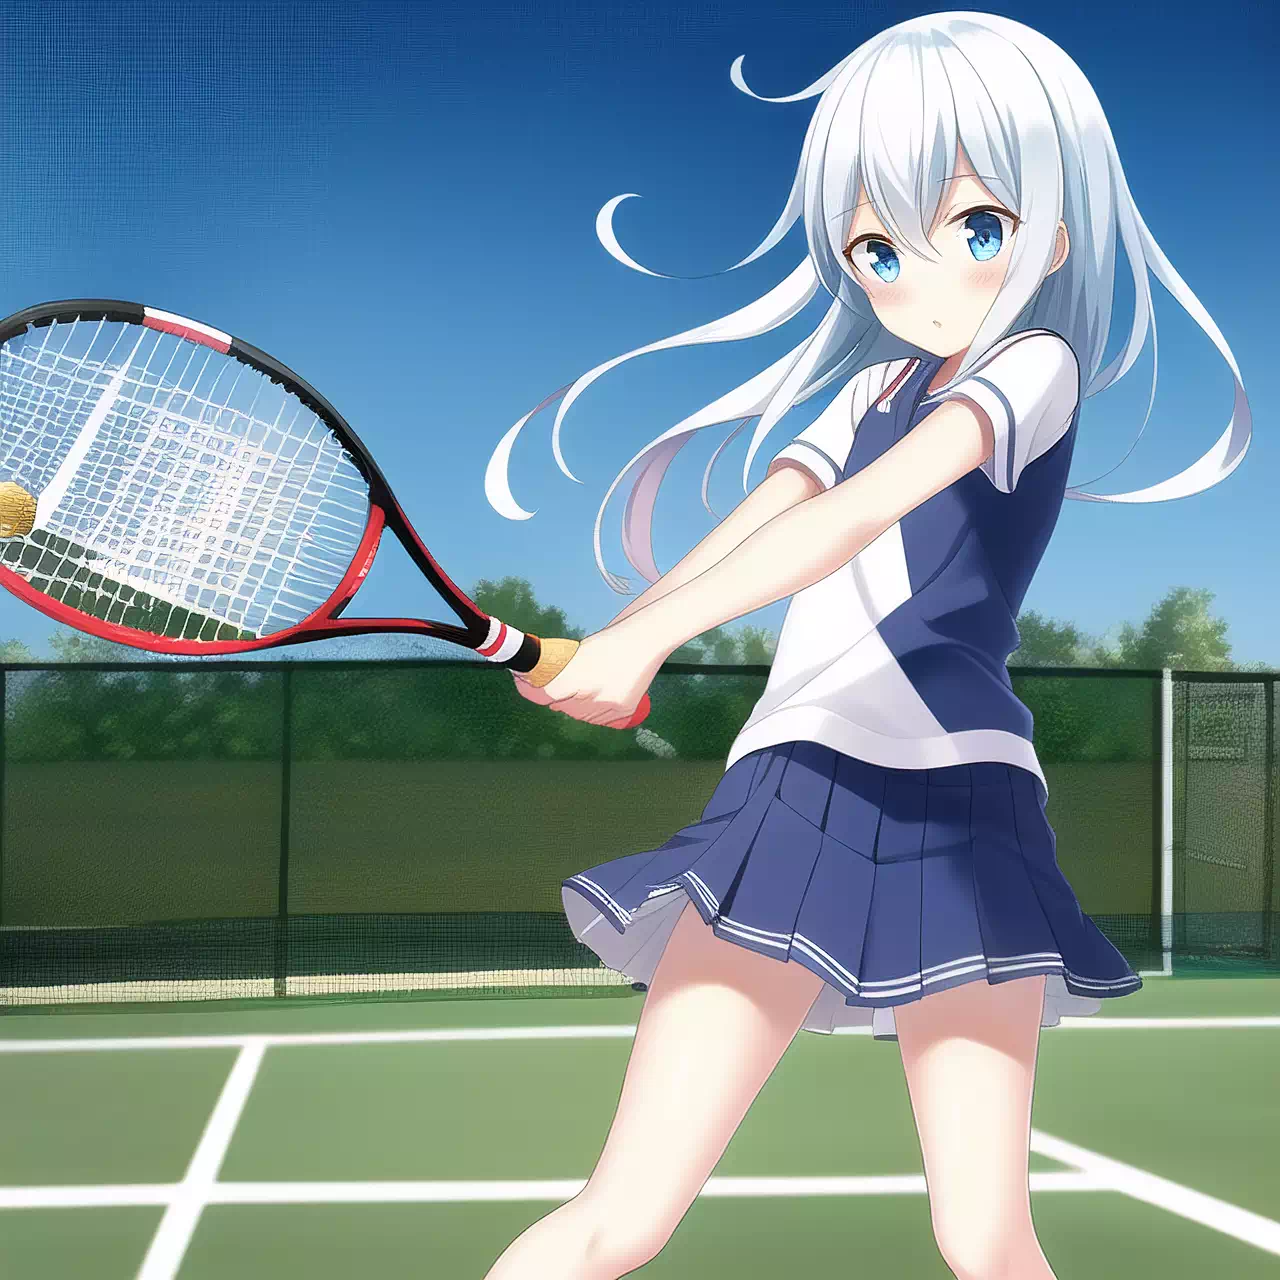 Hibiki plays tennis!